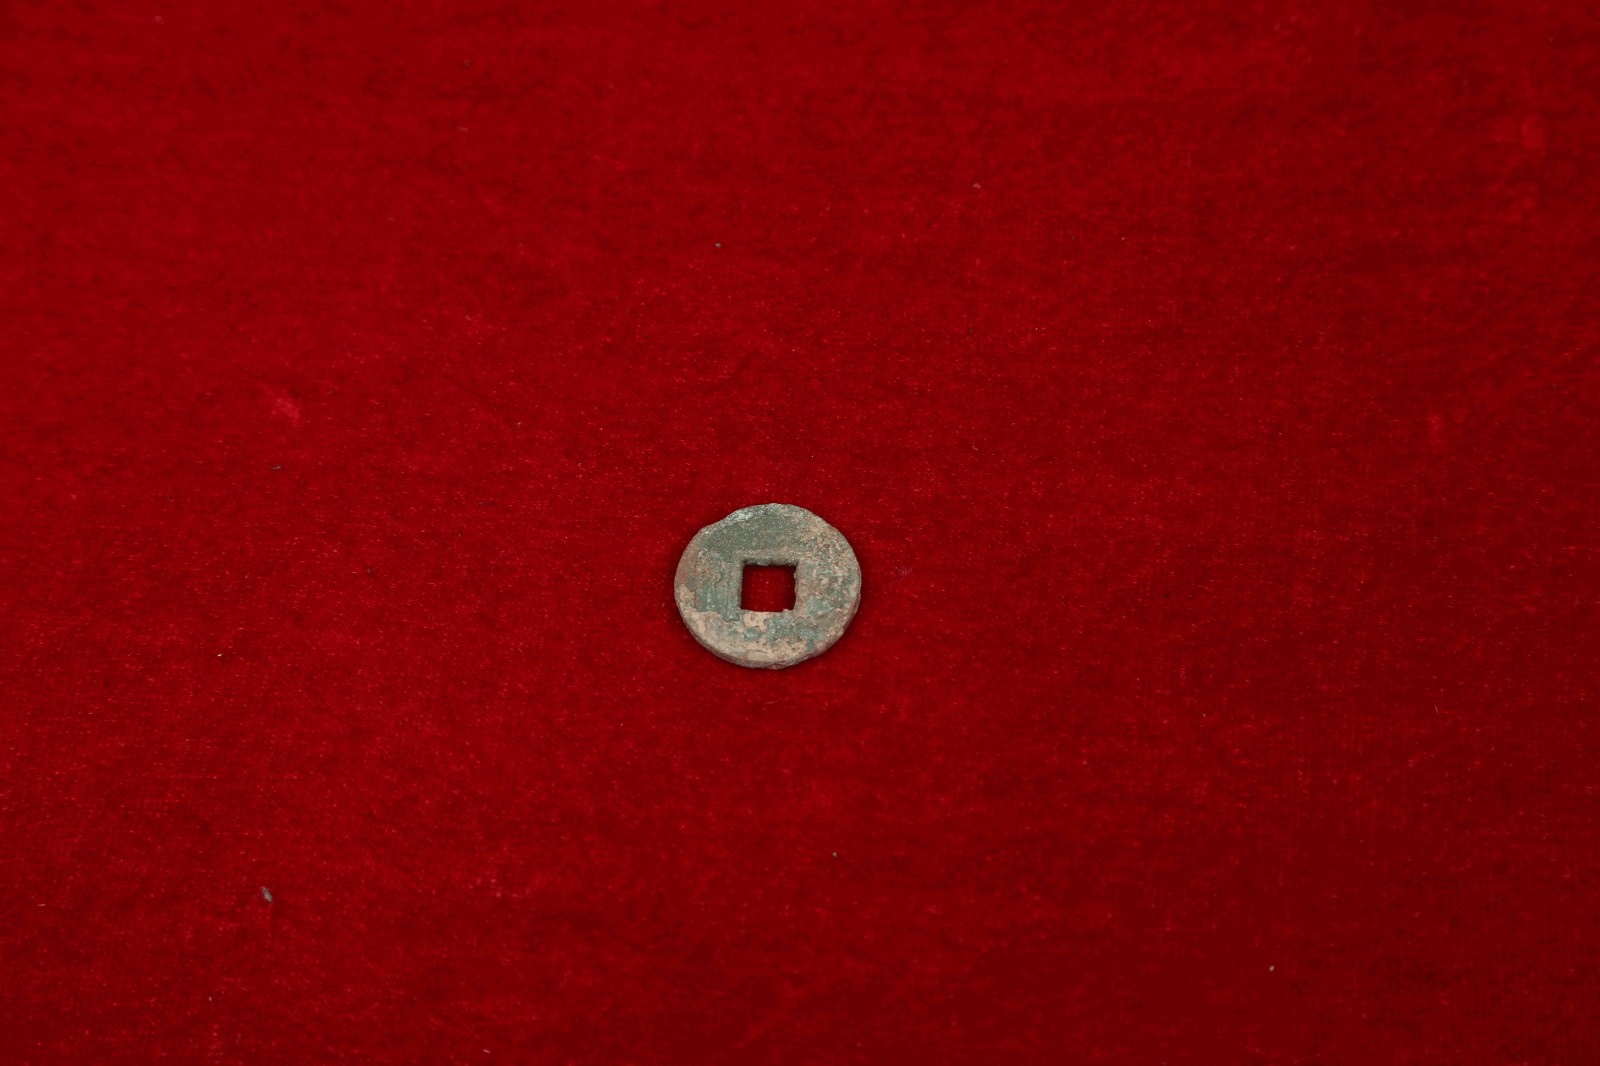 SDCS201709722—货泉铜钱，直径2.34米，厚度0.23厘米，重3.41克。.JPG